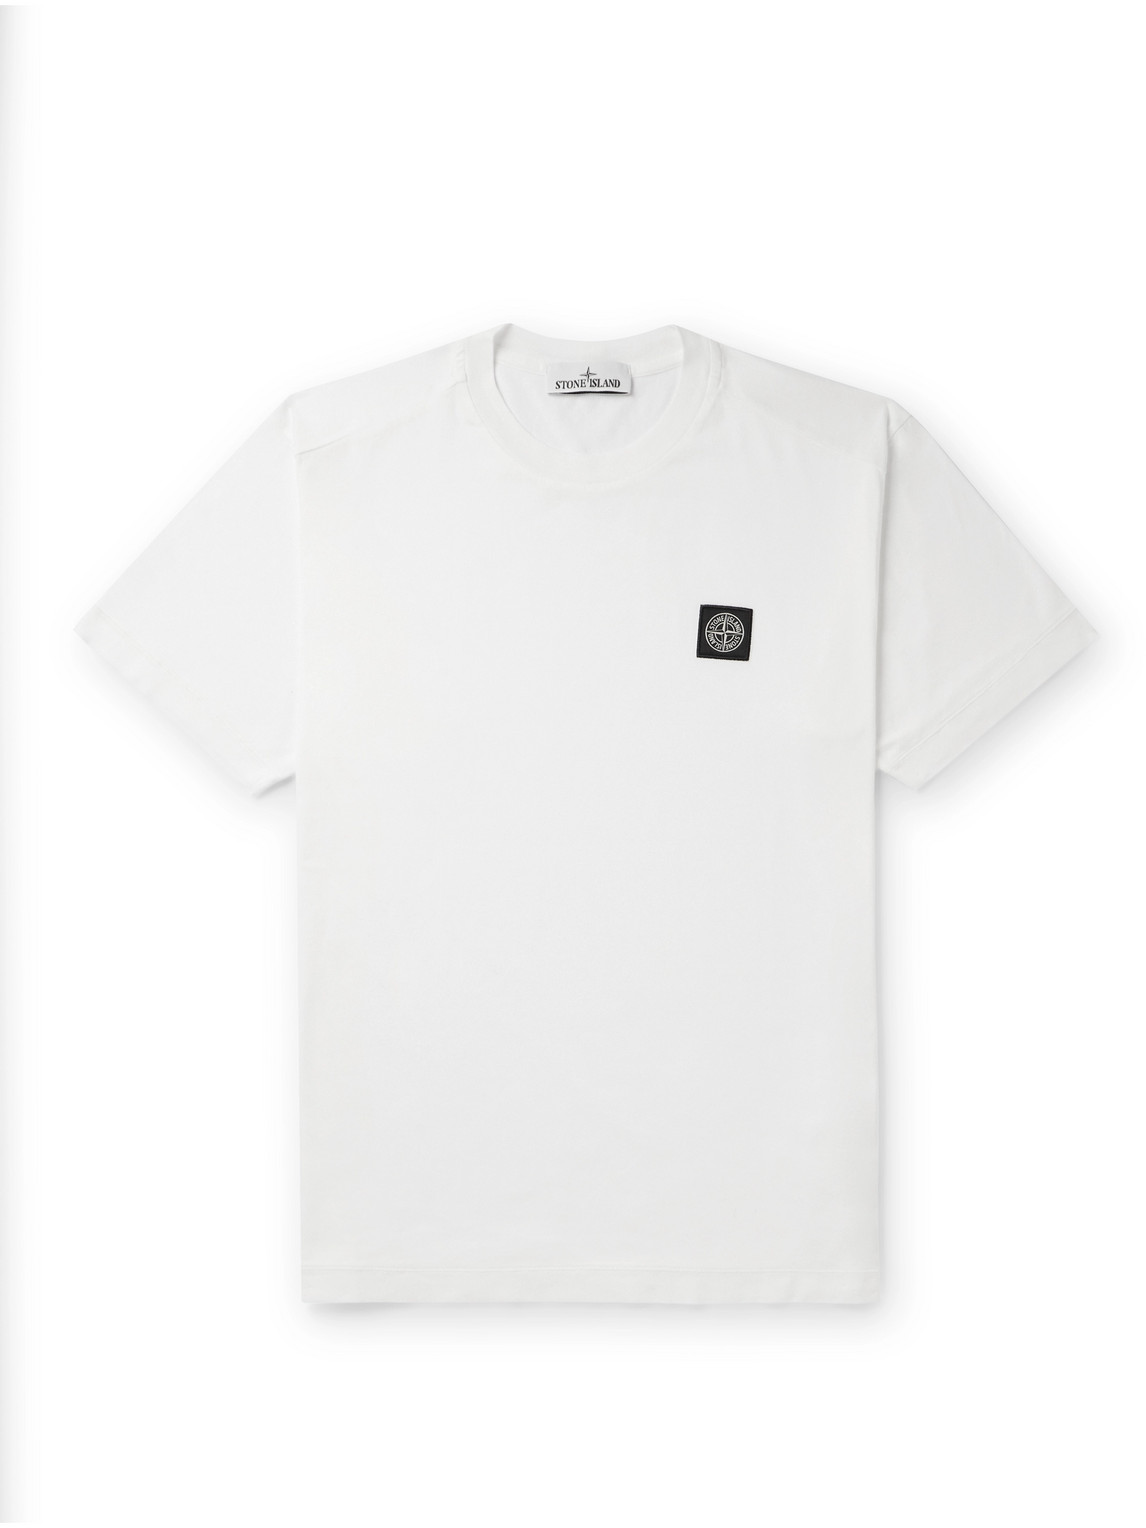 Stone Island - Logo-Appliquéd Cotton-Jersey T-Shirt - Men - White - S von Stone Island